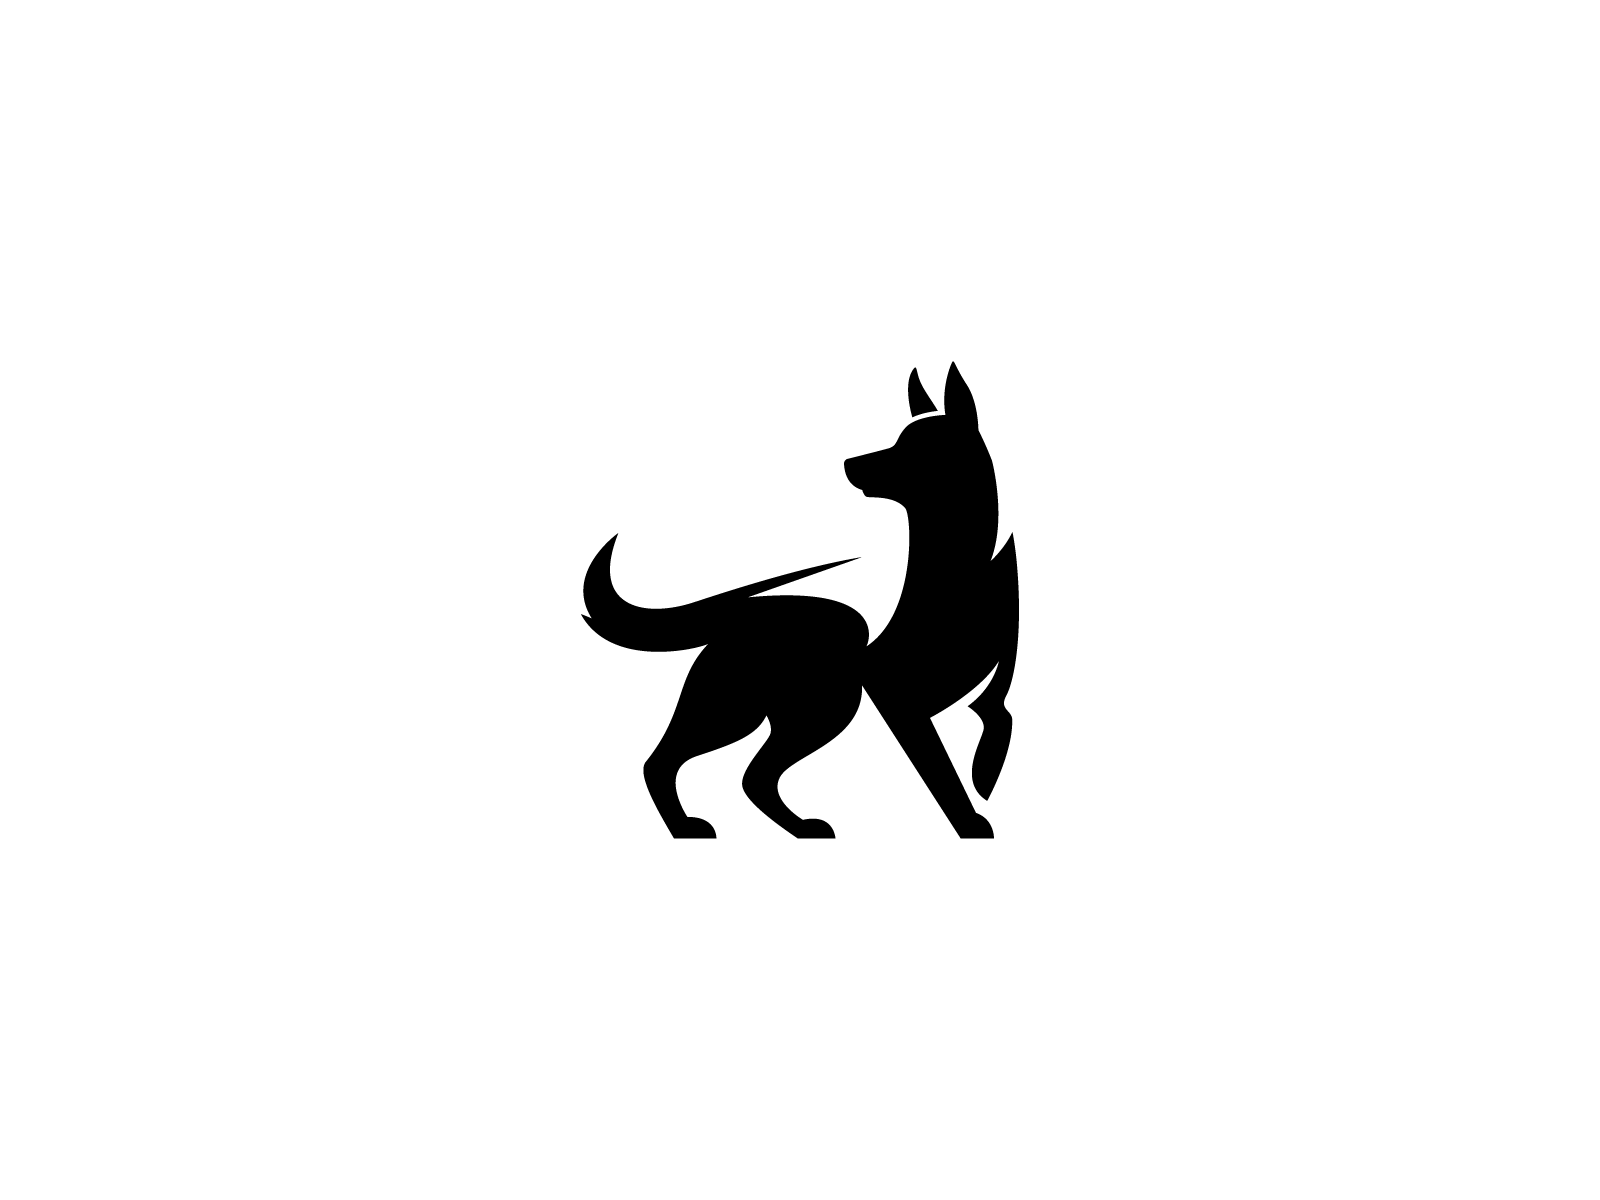 German Shepherd Dog Logo by Ery Prihananto on Dribbble